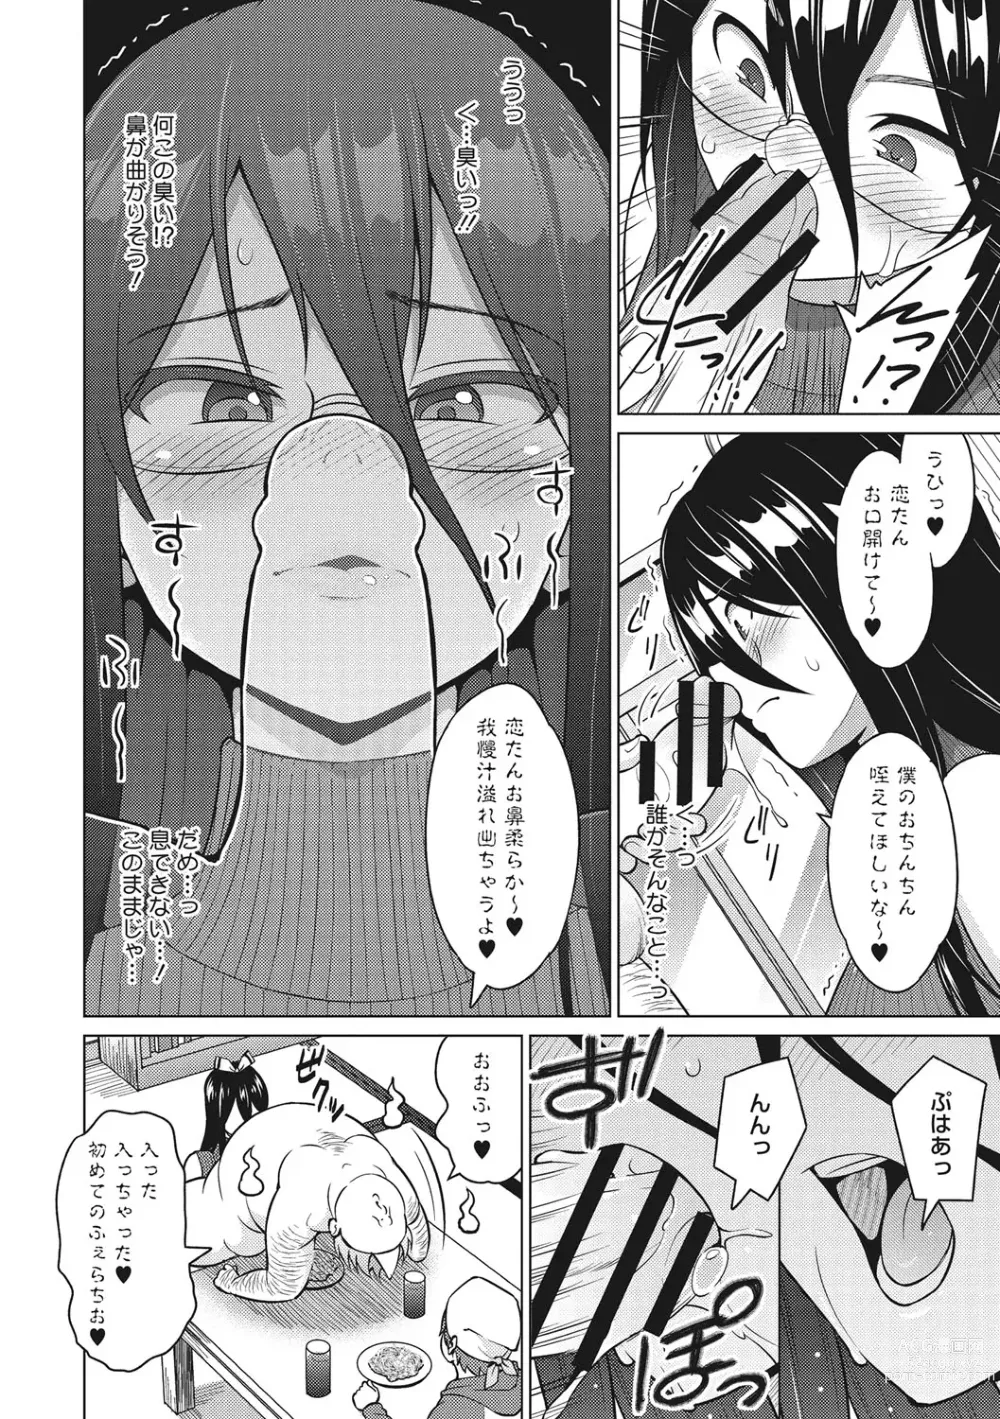 Page 7 of manga Risky Play